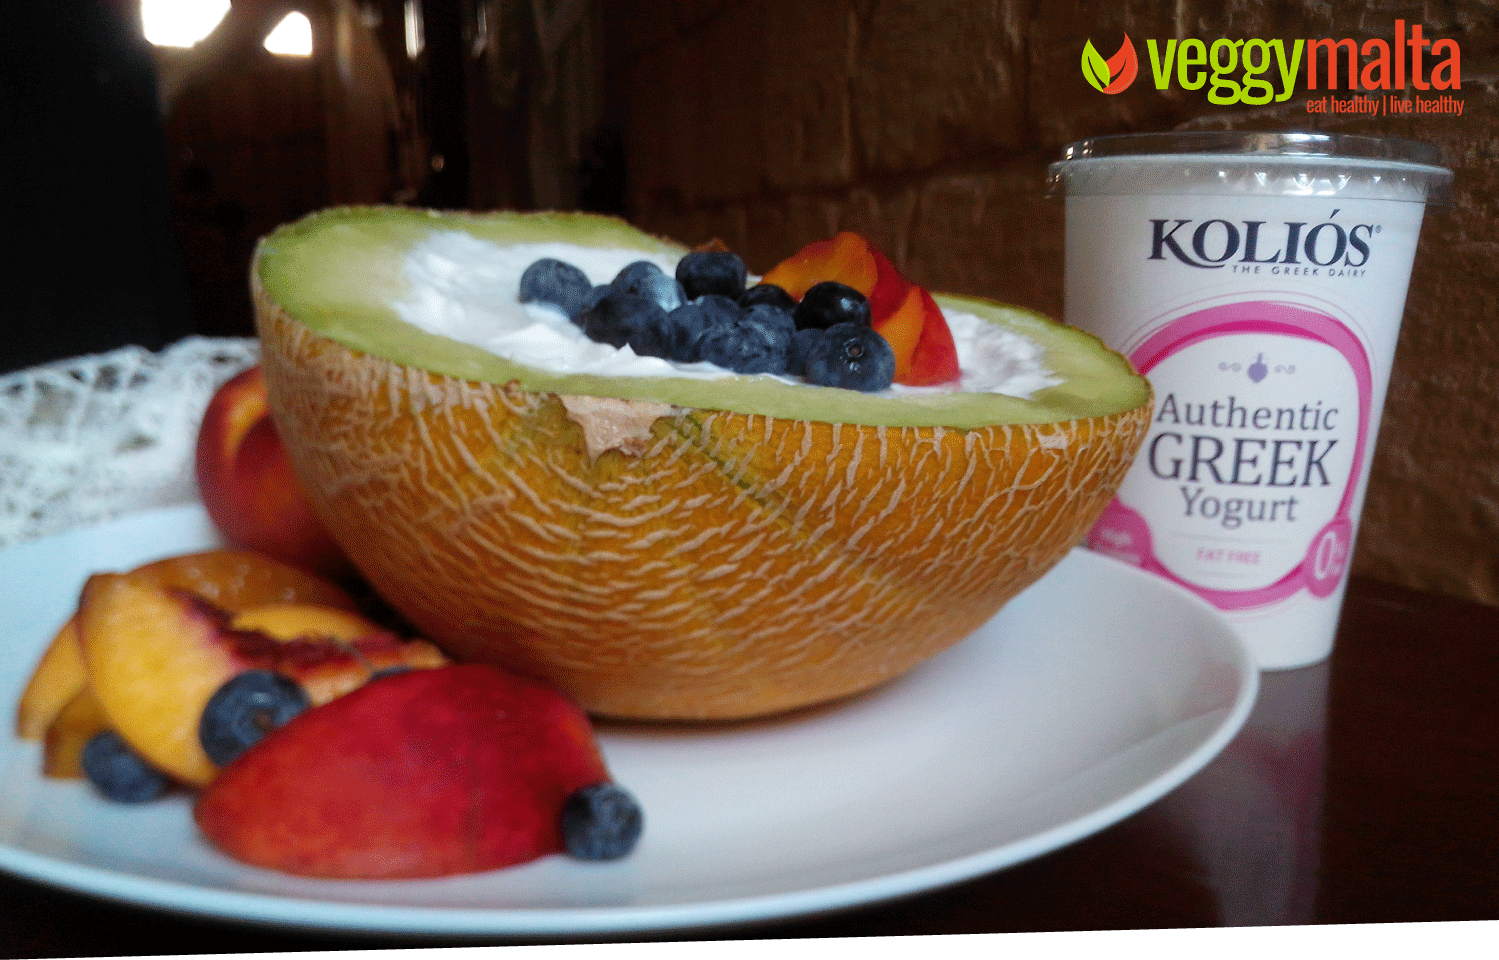 Blueberries and Kolios greek yogurt mix in fresh Cantaloupe bowl